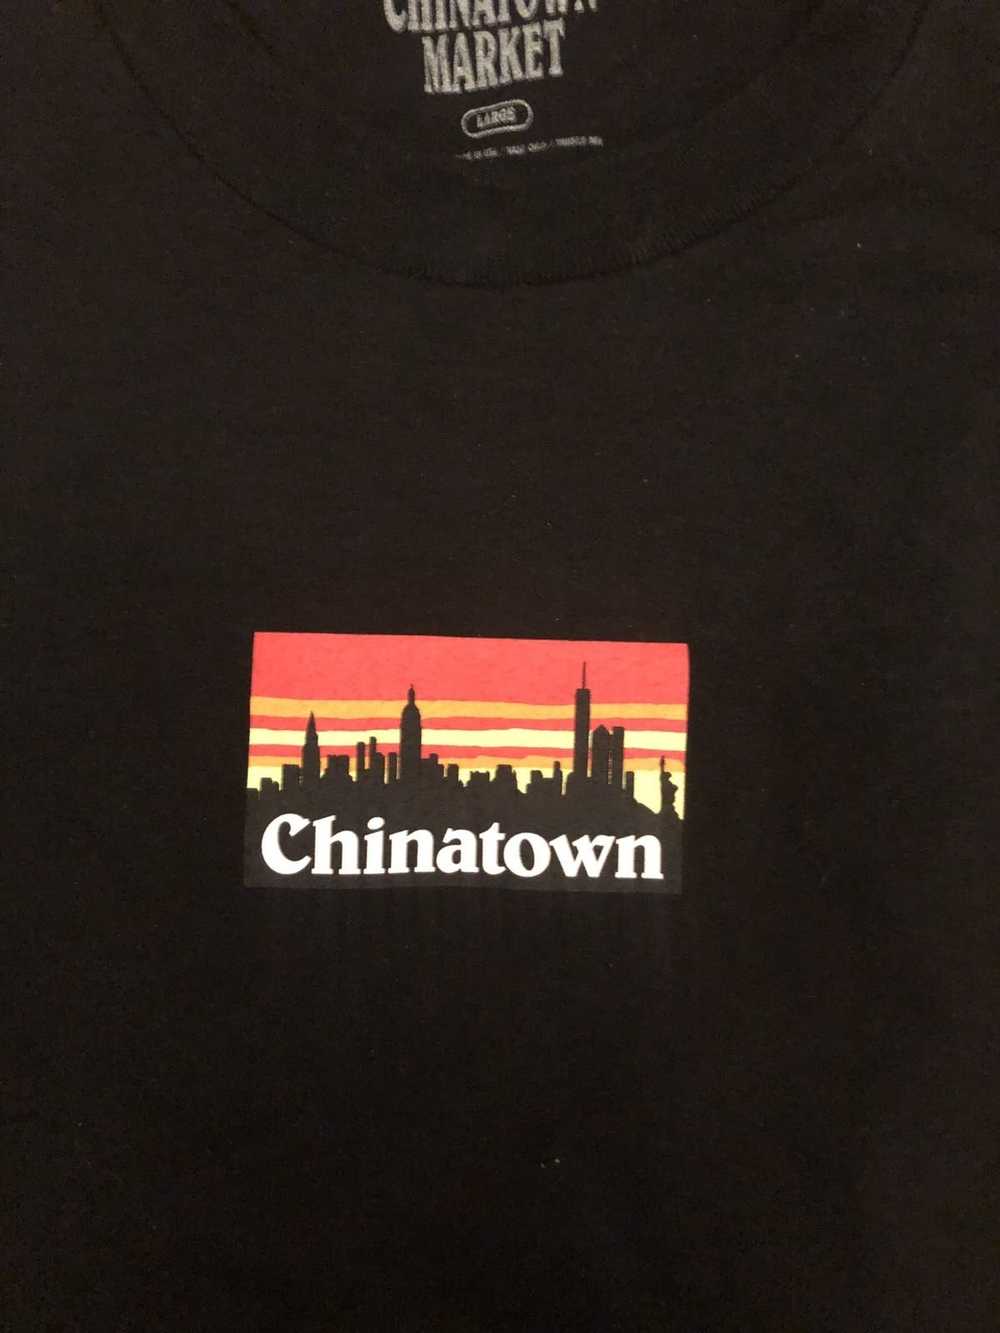 Vintage Chinatown market box logo - image 2